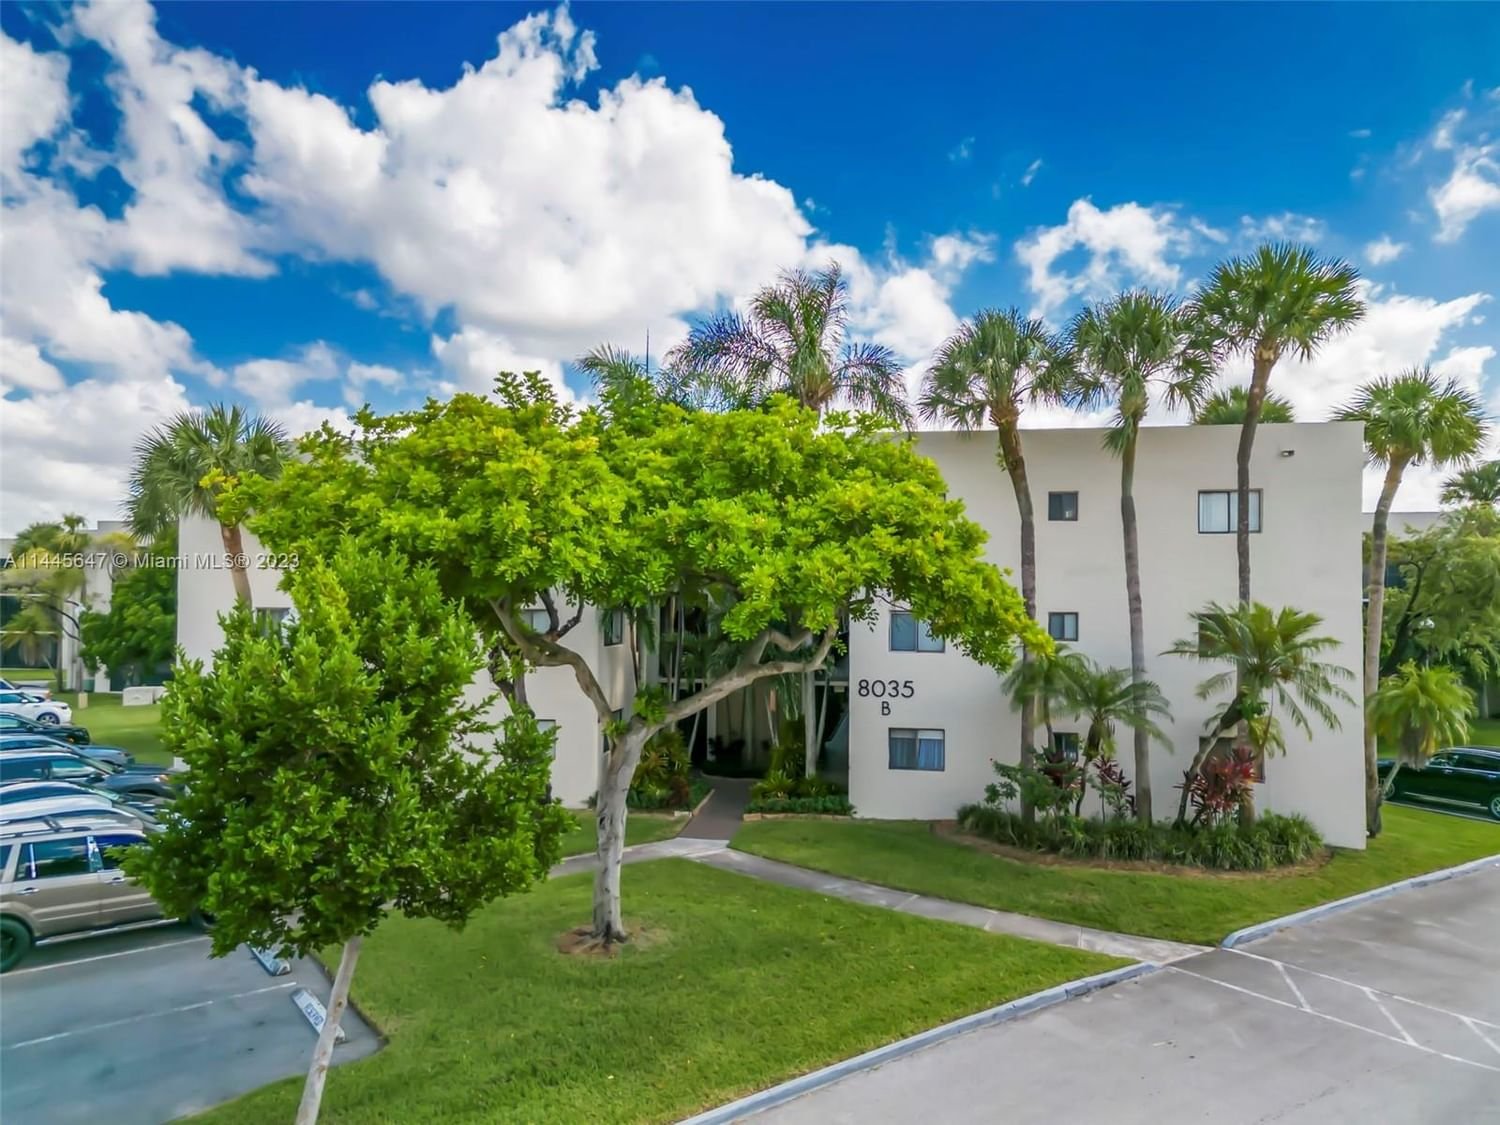 Real estate property located at 8035 107th Ave #302, Miami-Dade County, Miami, FL